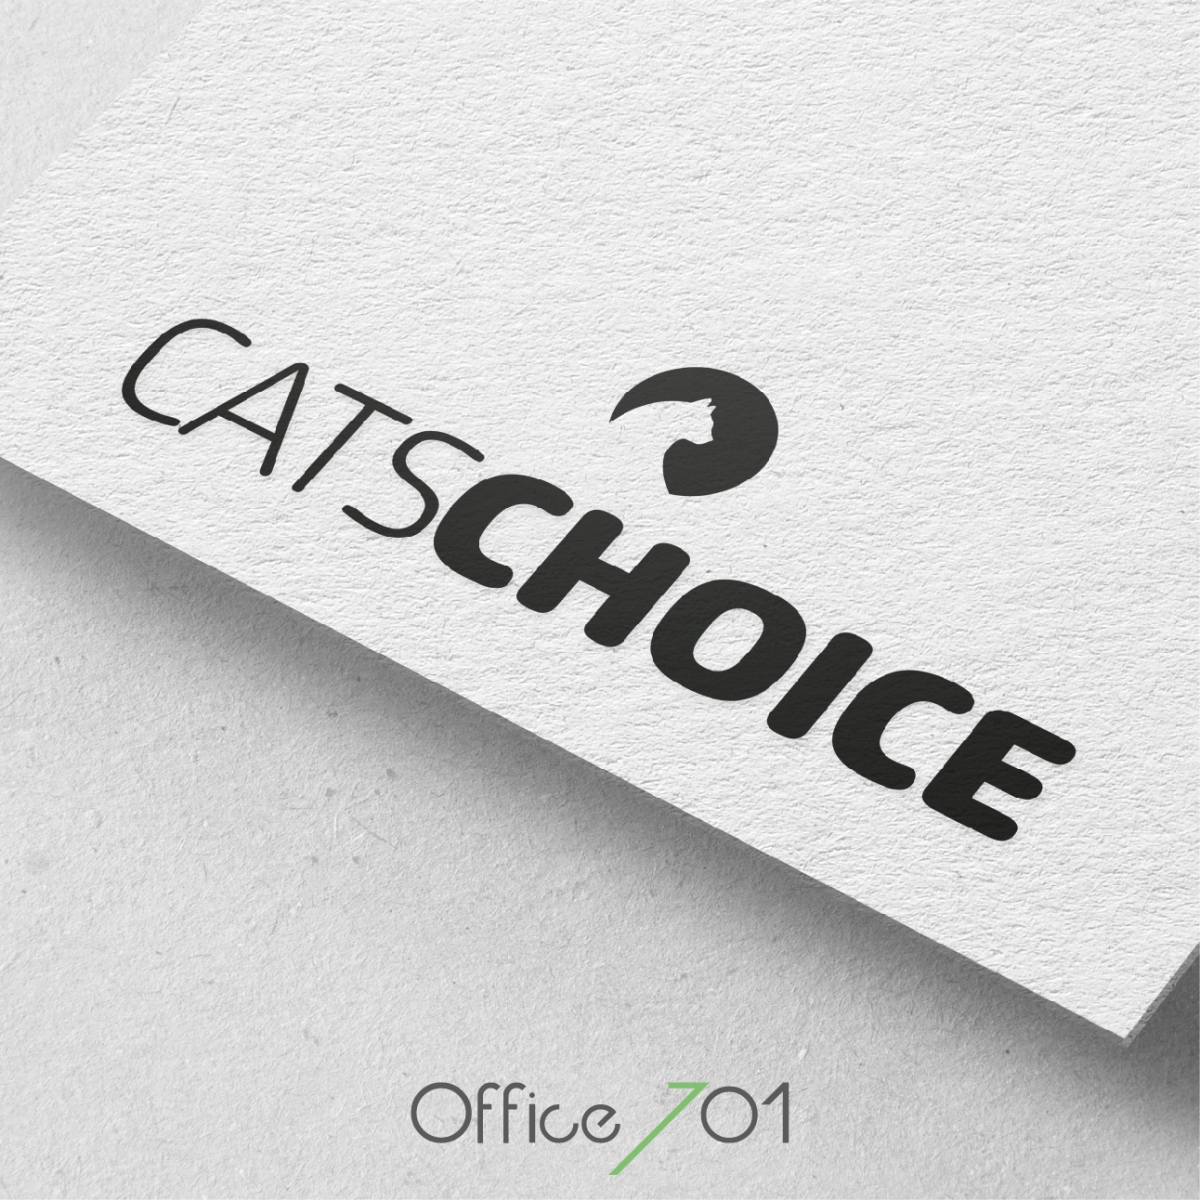 Office701 | CatsChoice Logo Tasarımı